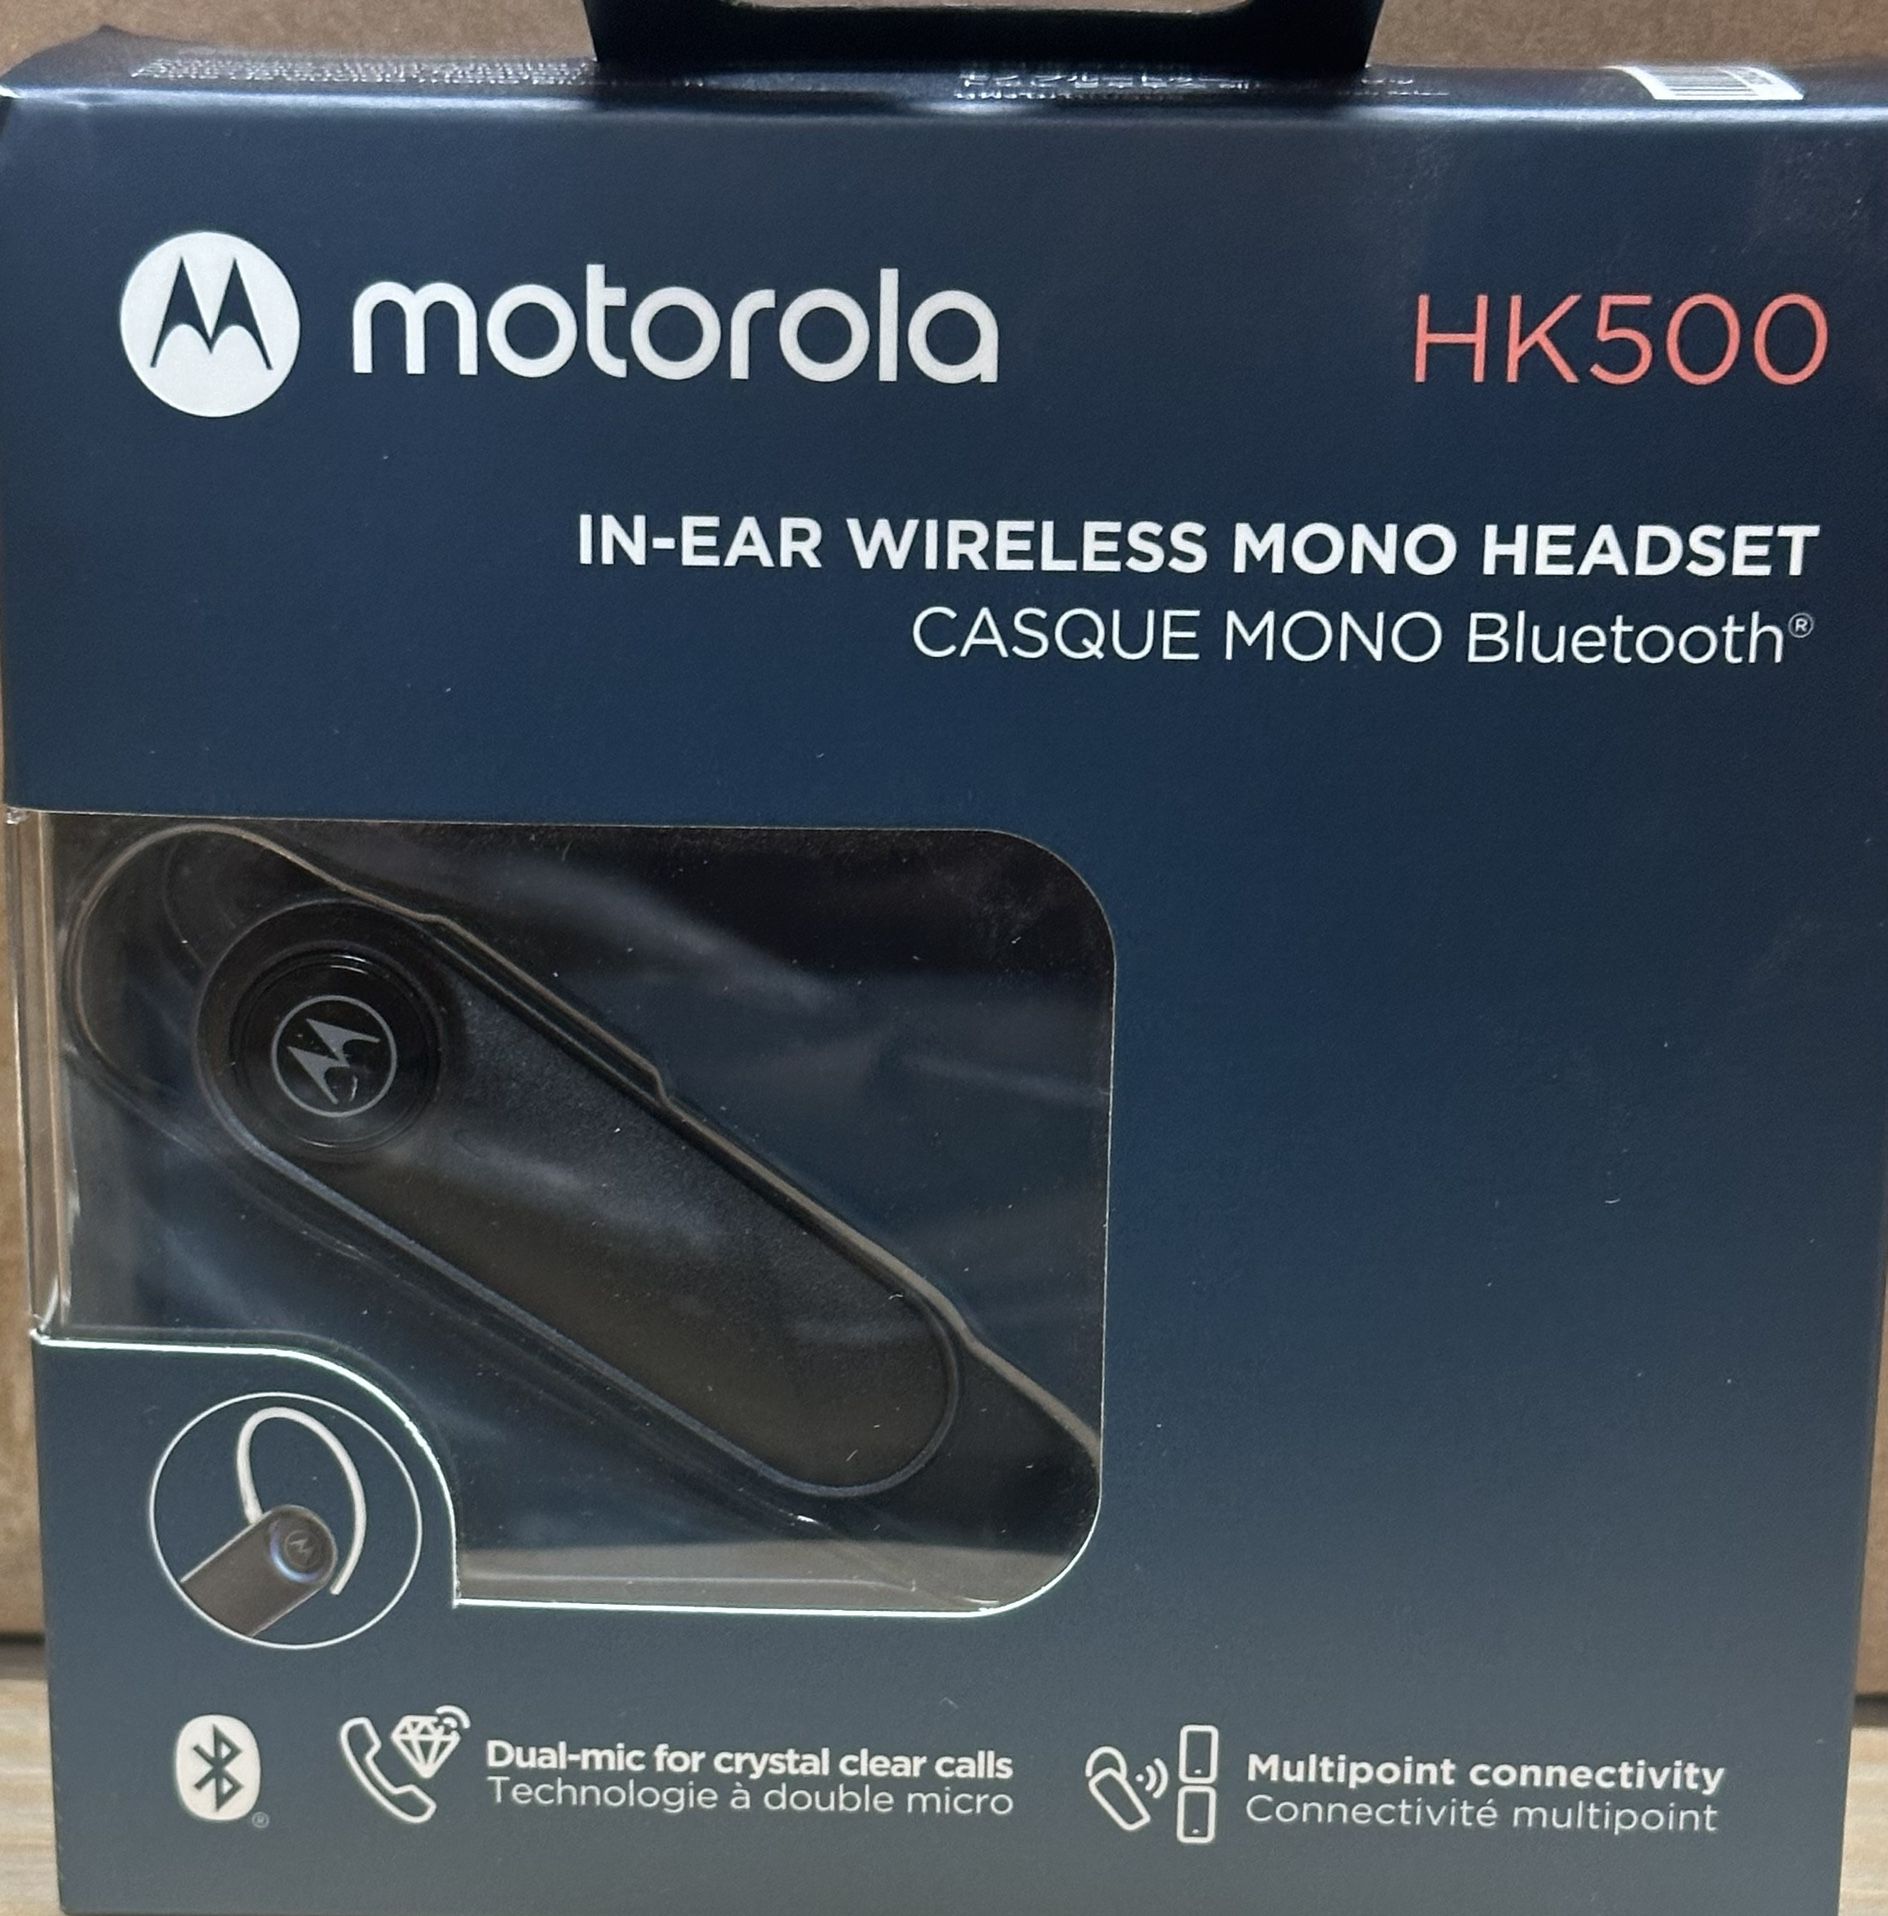 Motorola HK500 